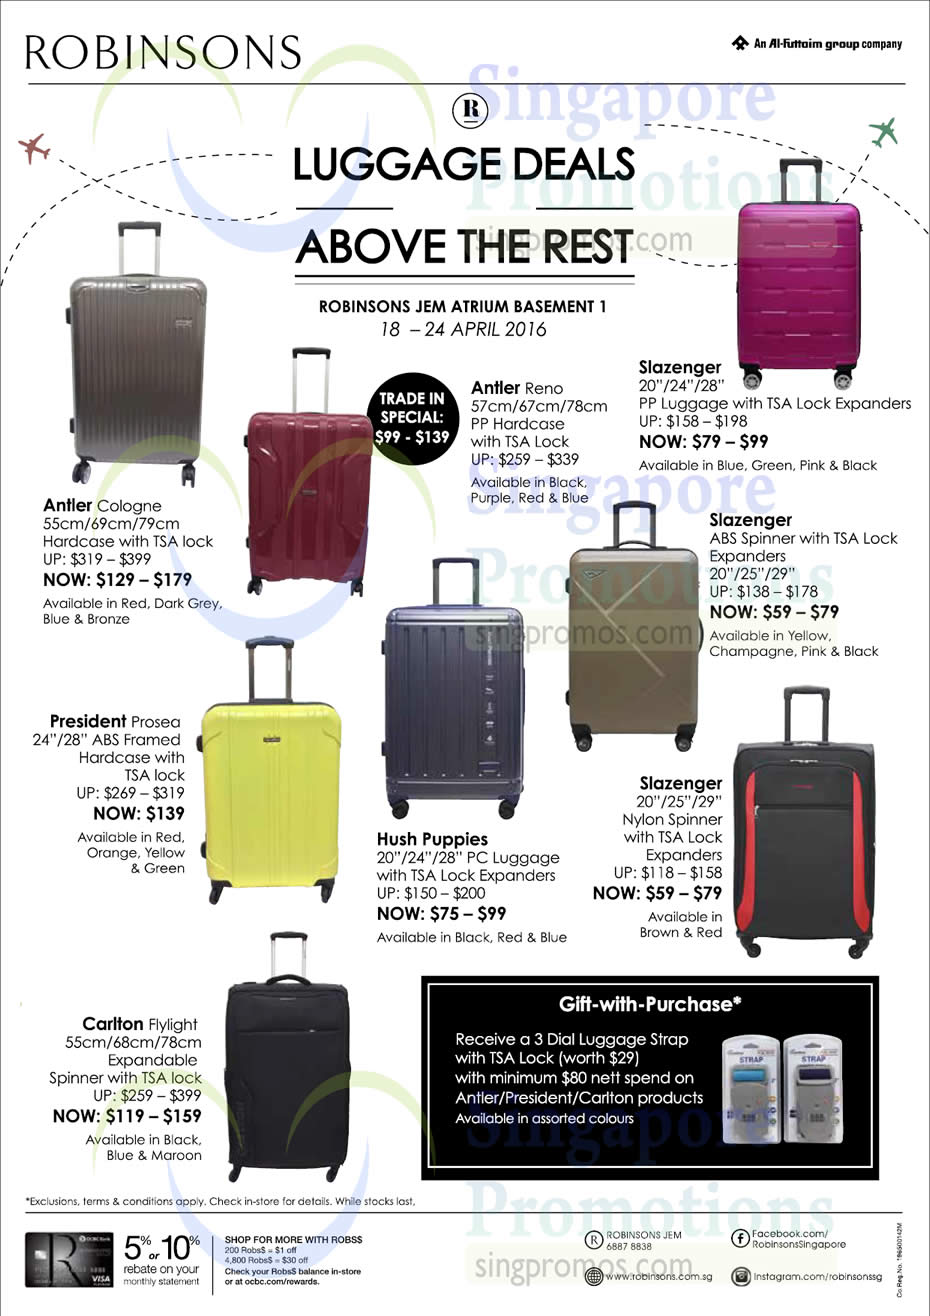 Robinsons Luggage Deals 17 Apr 2016 » Robinsons Luggage Deals at JEM Atrium 18 – 24 Apr 2016 ...